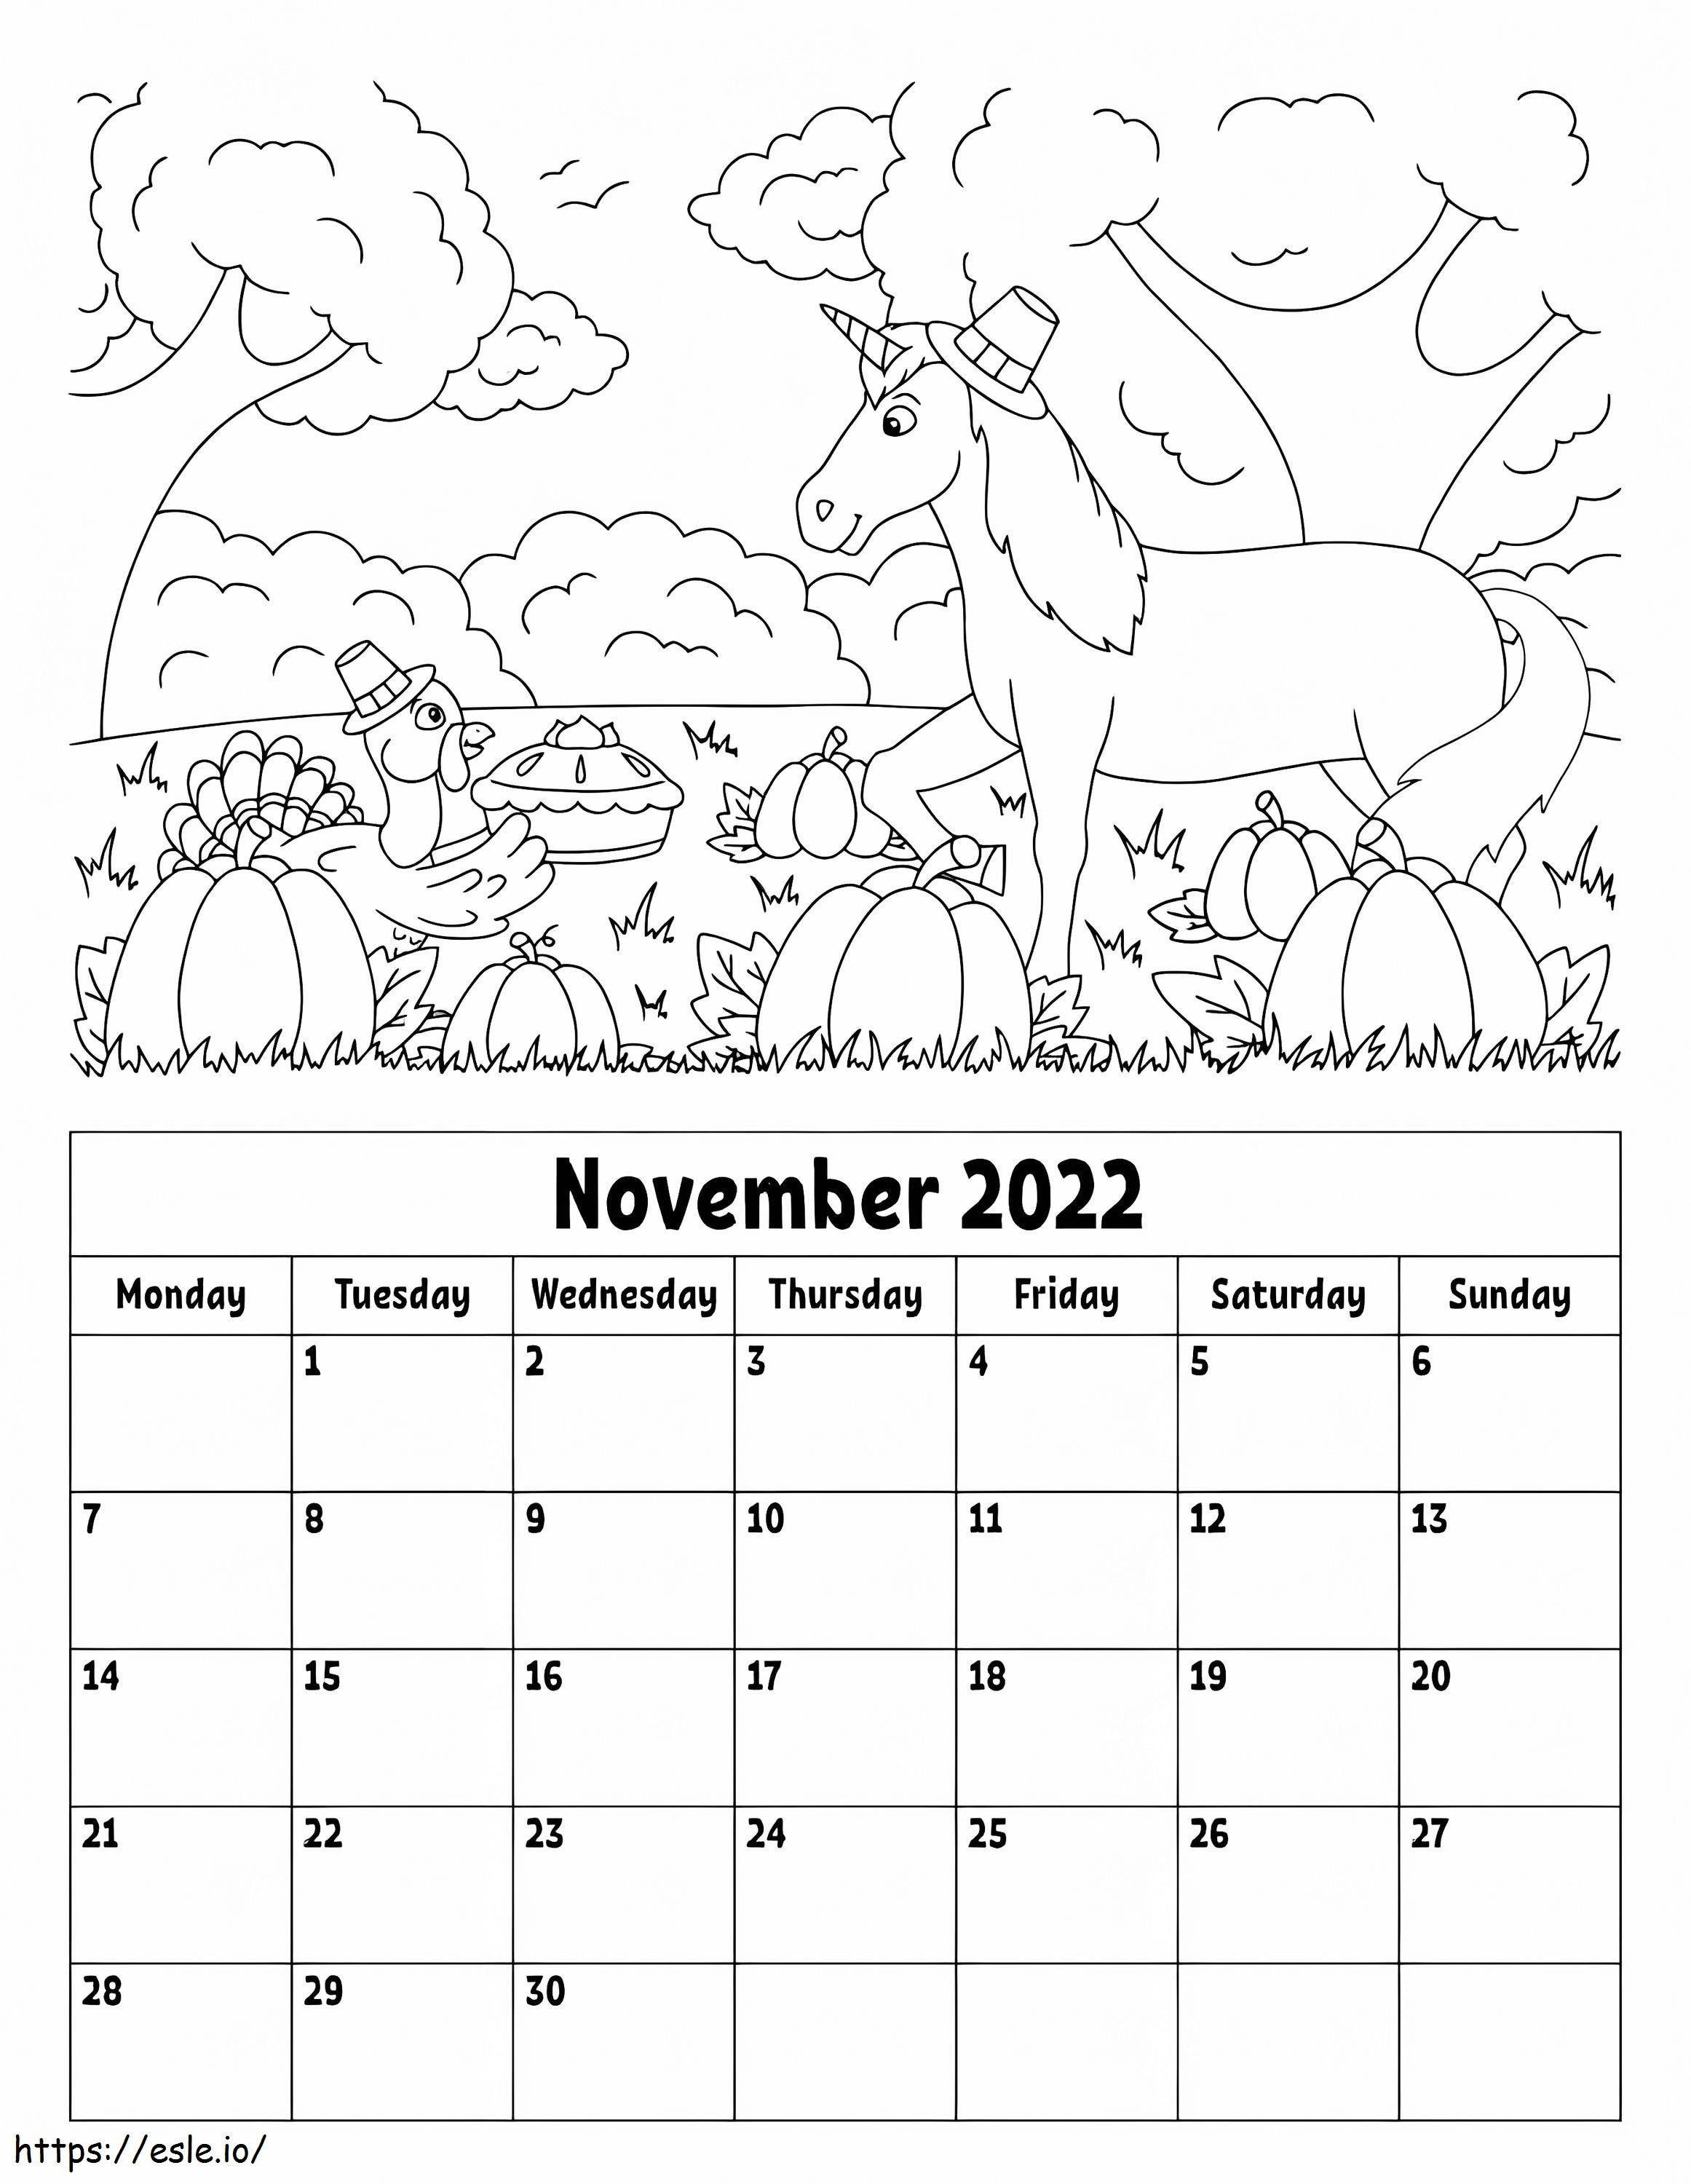 November 2022 Calendar coloring page